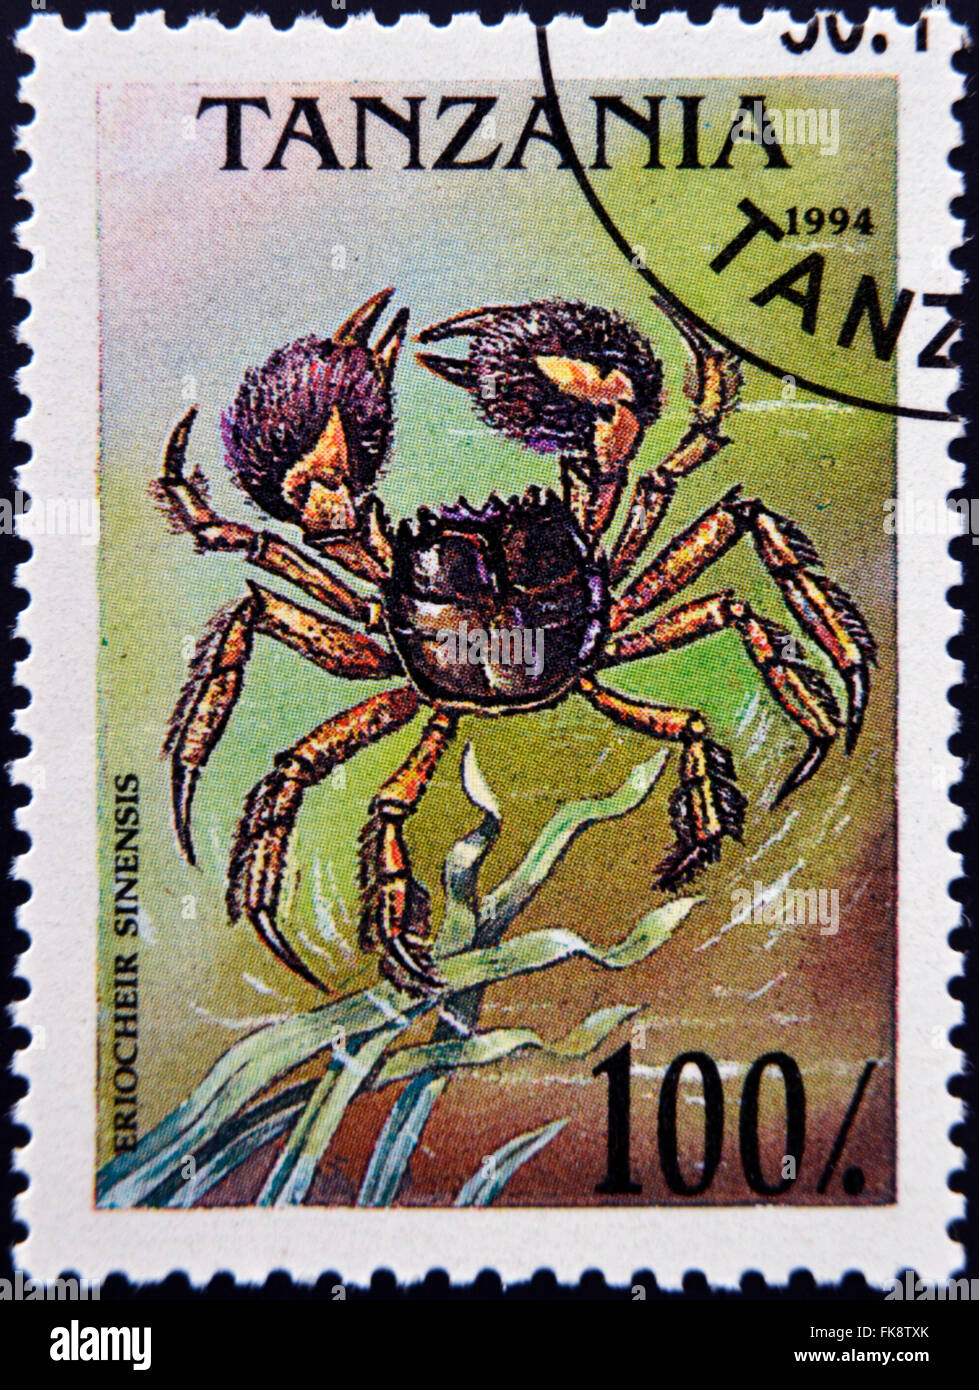 Tanzanie - circa 1994 : timbre imprimé en Tanzanie montre l'image d'un crabe chinois, Eriocheir sinensis, vers 1994 Banque D'Images